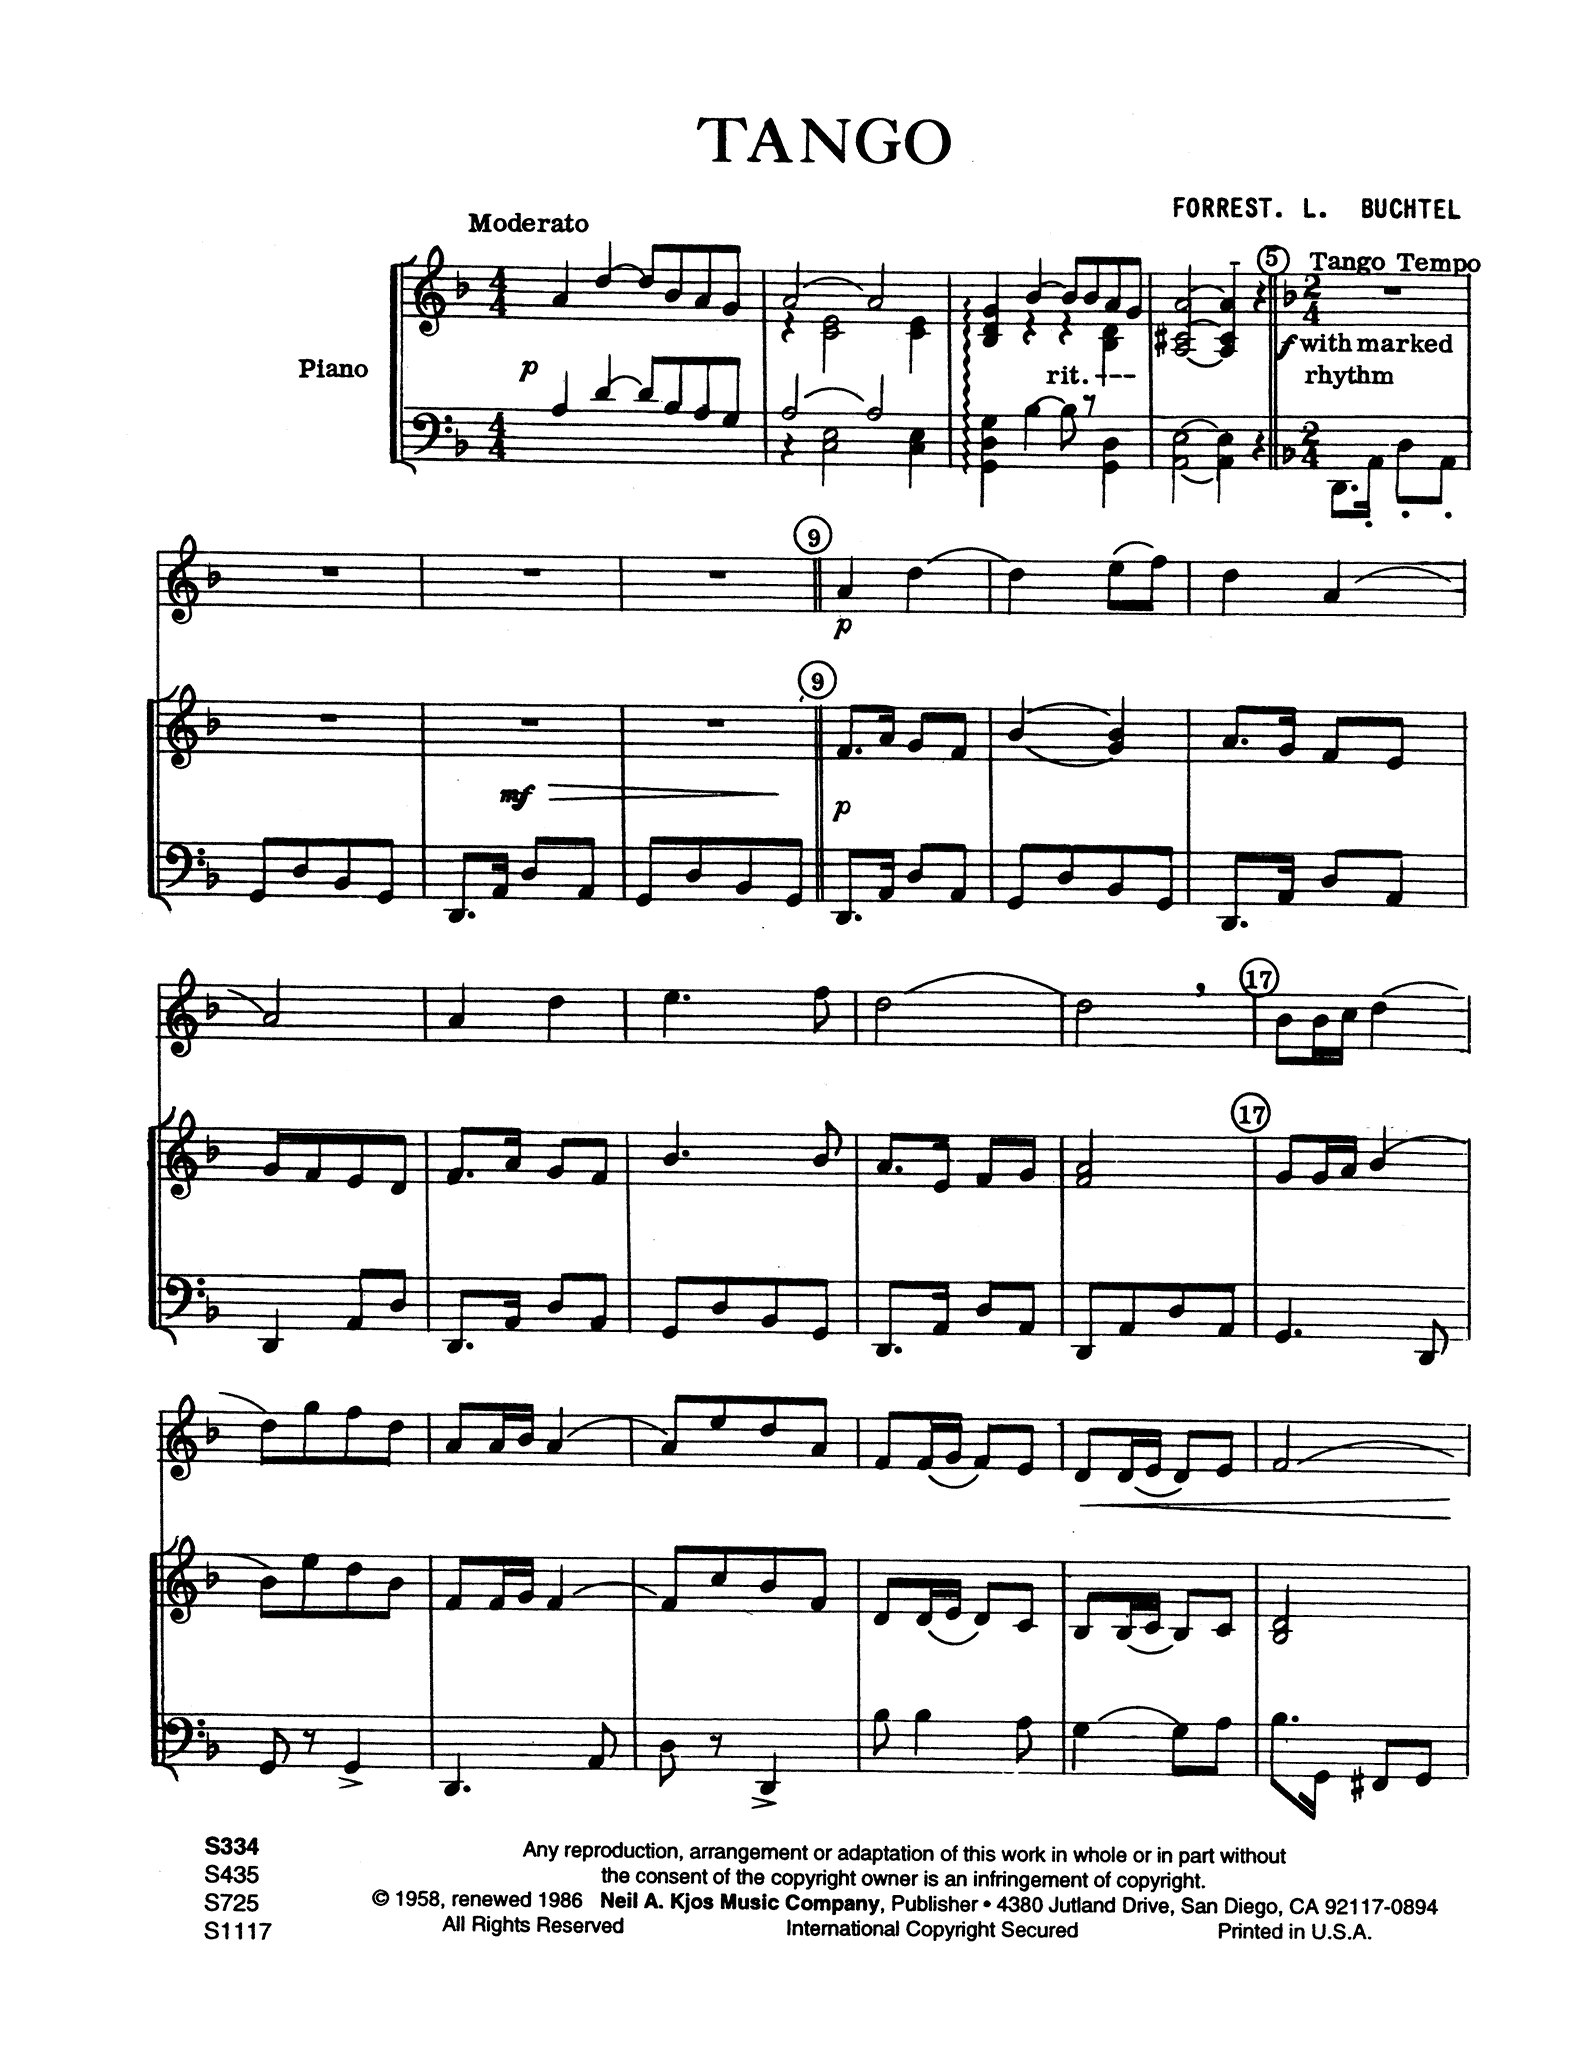 Buchtel, Forrest Tango clarinet and piano score